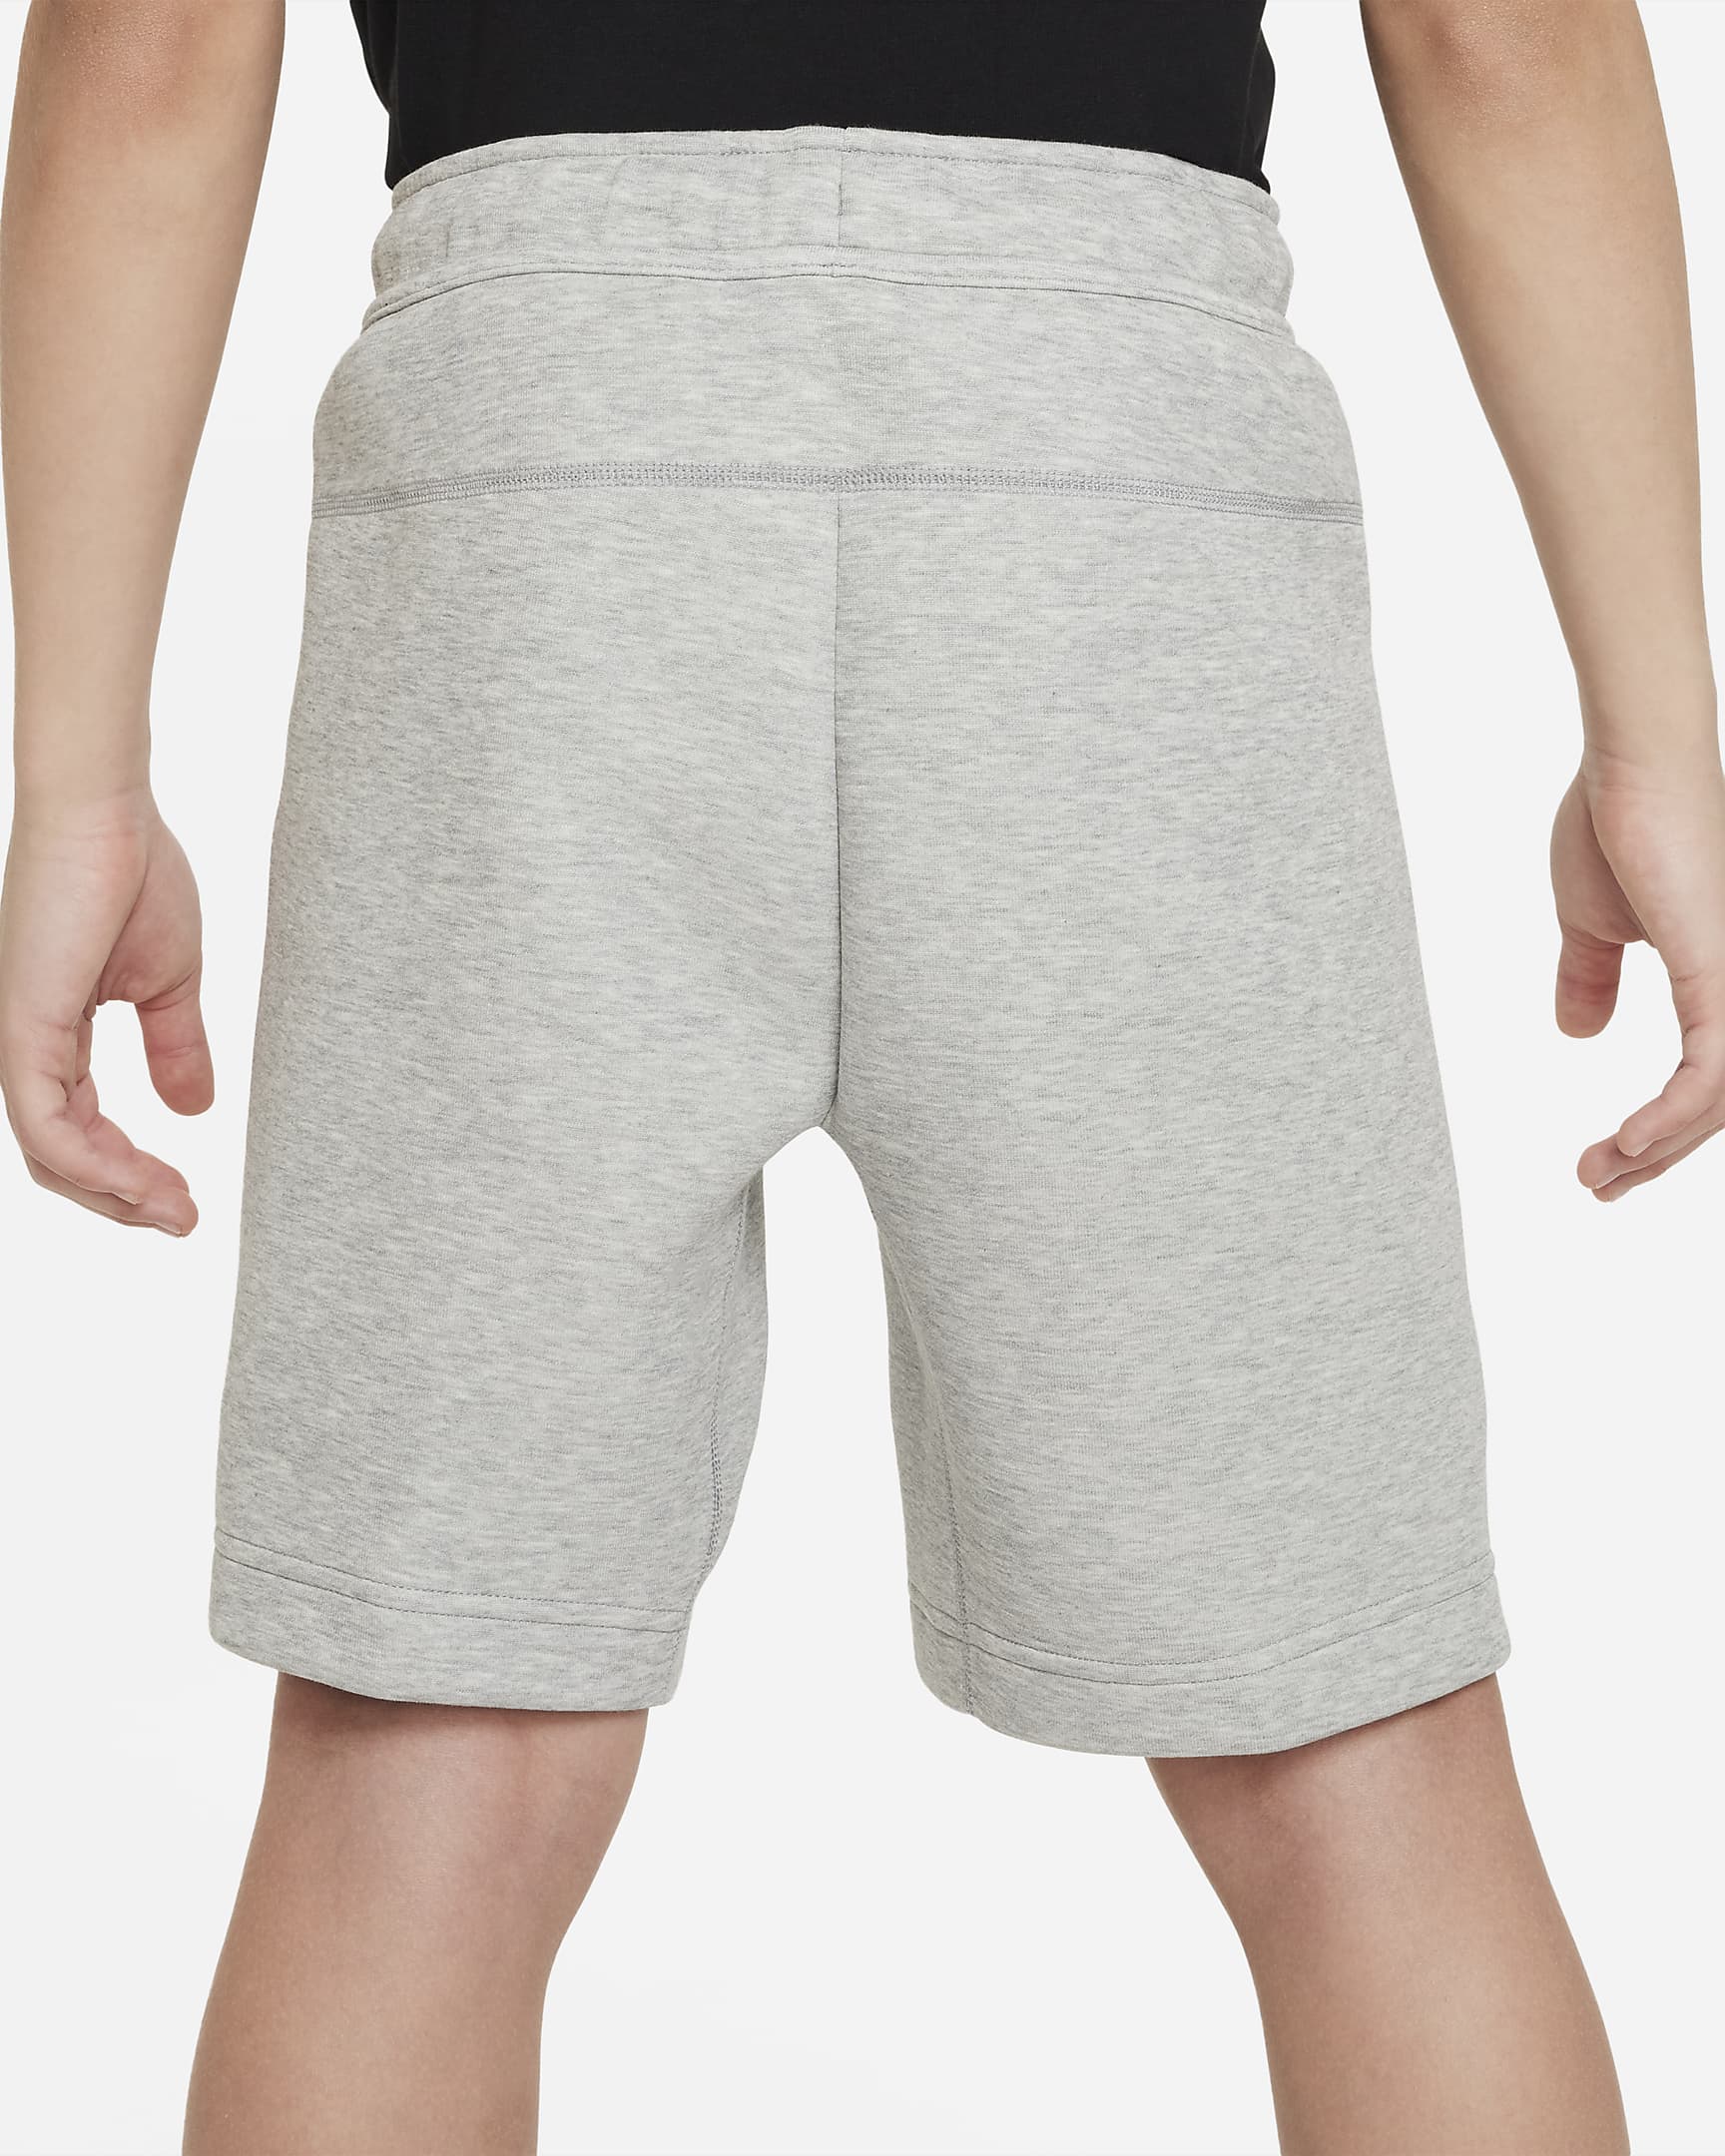 Shorts Nike Tech Fleece för ungdom (killar) - Dark Grey Heather/Svart/Svart